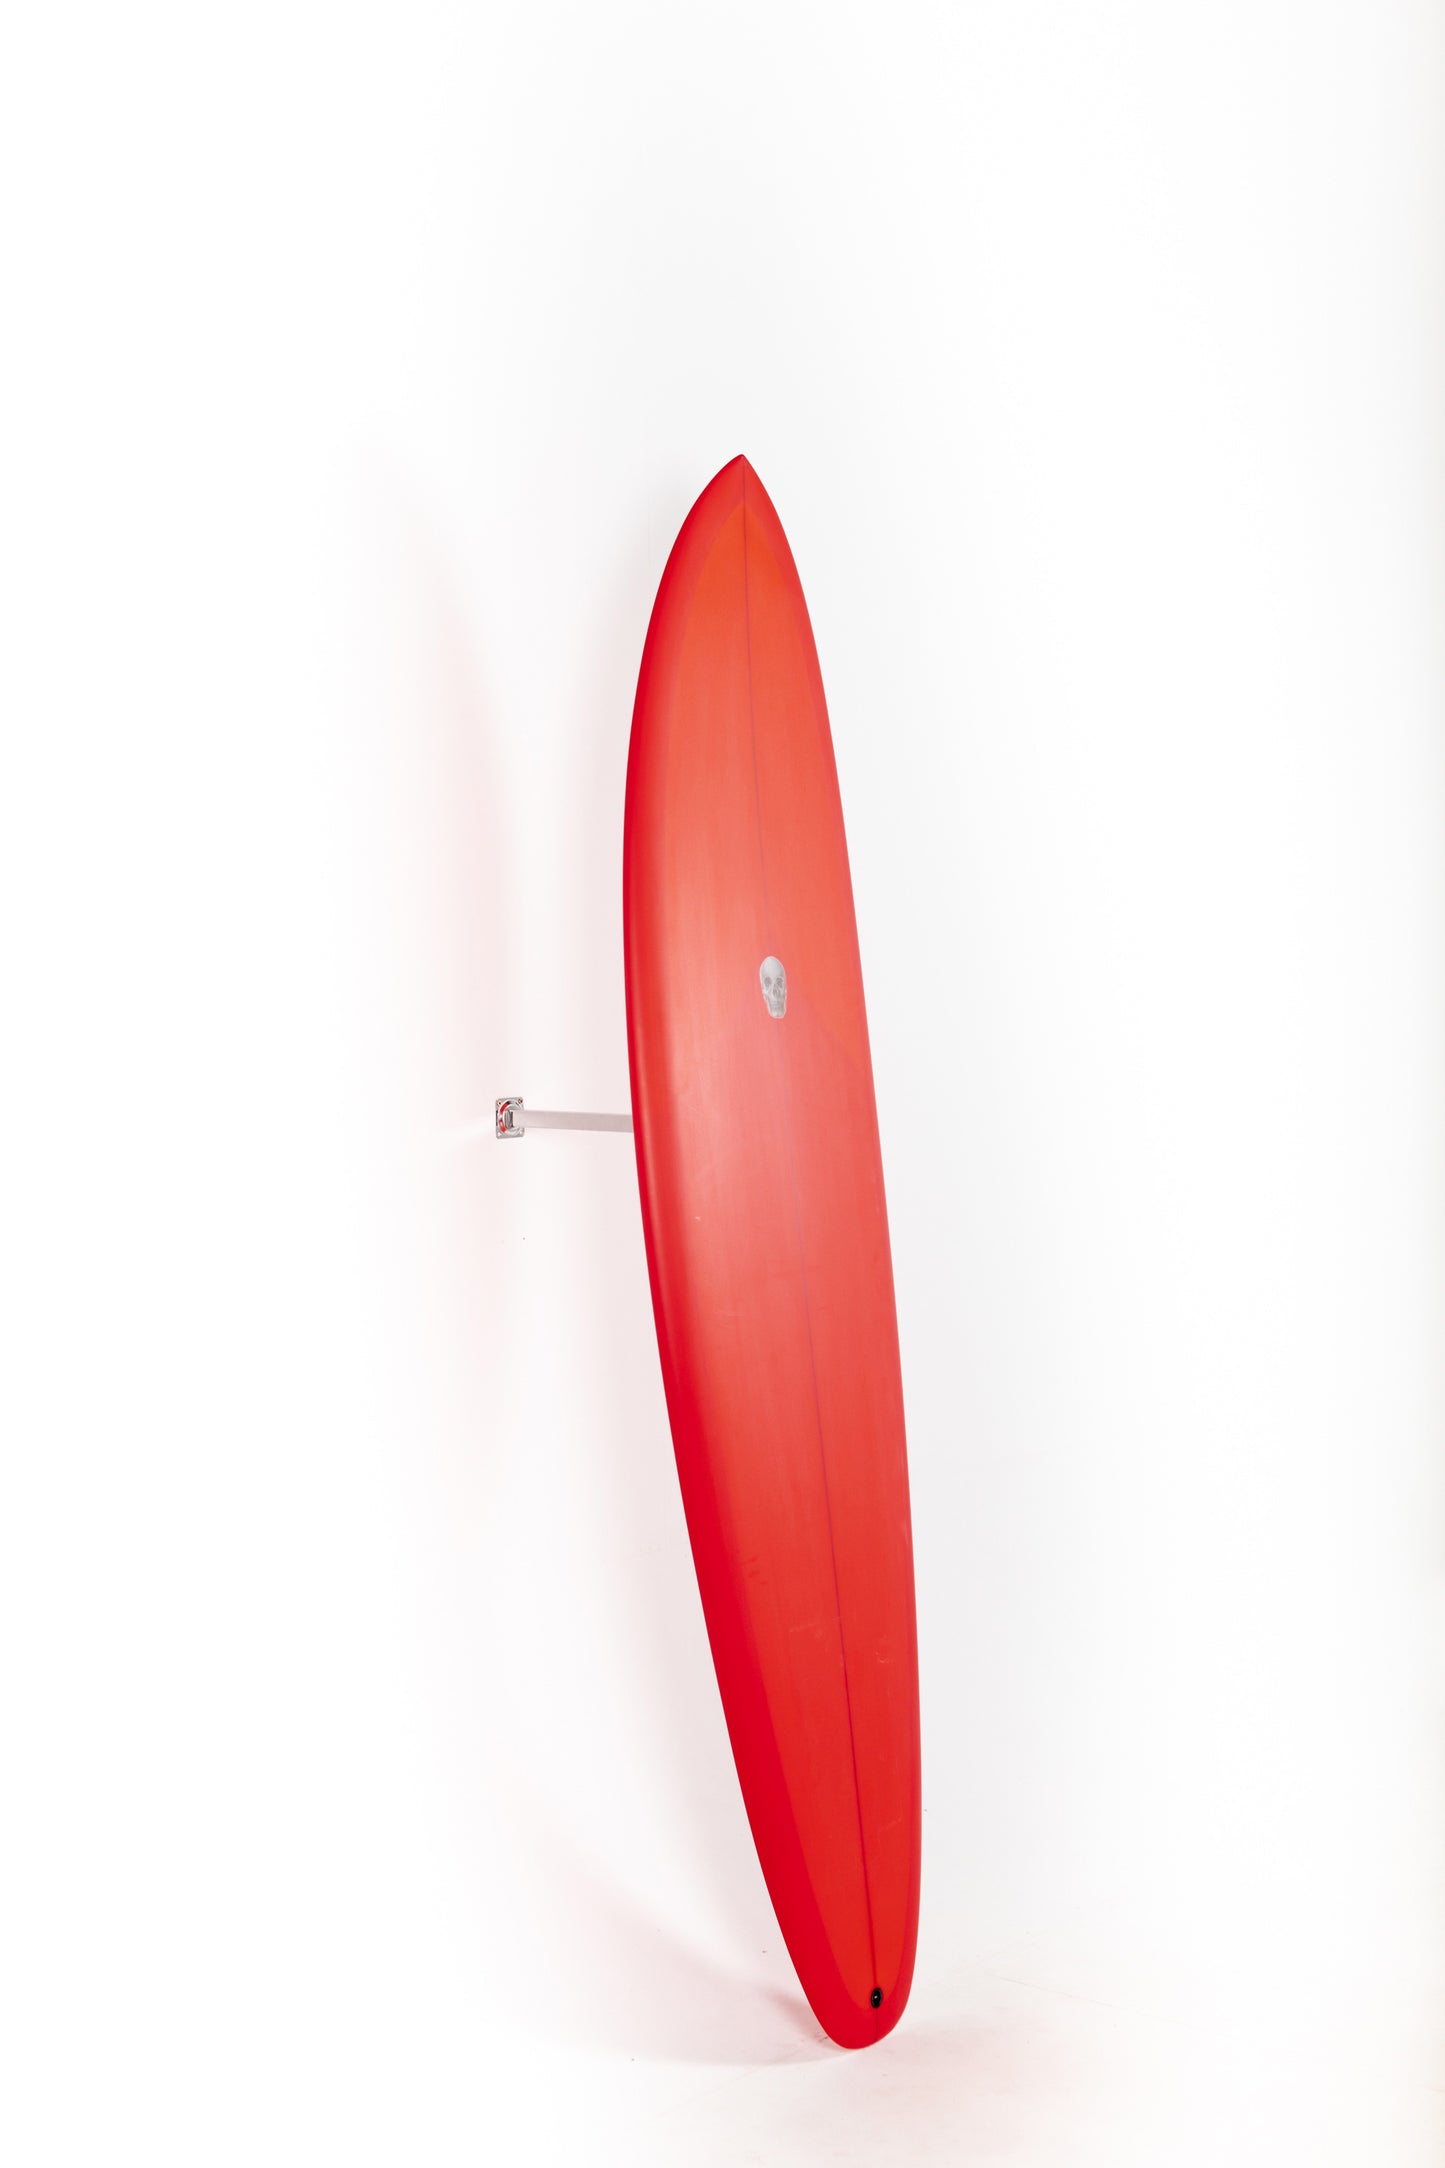 
                  
                    Pukas Surf Shop - Christenson Surfboards - TWIN TRACKER - 7'2" x 21 1/4  x 2 7/8 - CX03310
                  
                